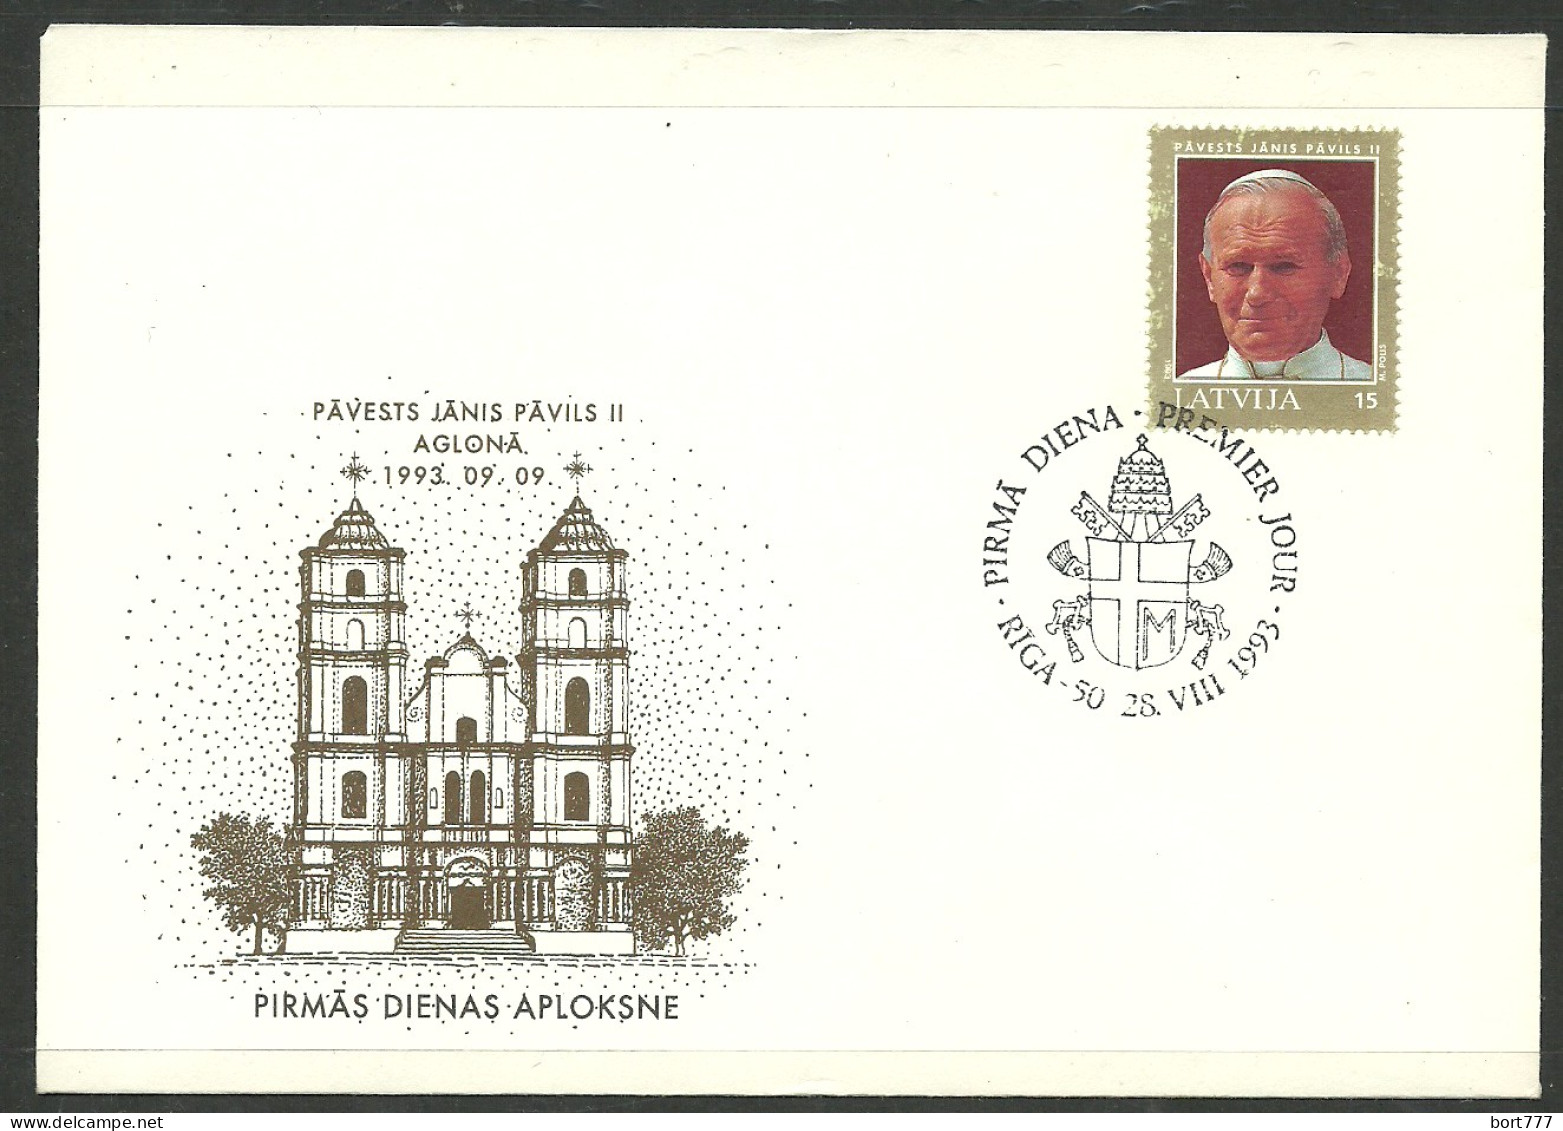 Latvia FDC Cover 1993 Year Pope - Latvia